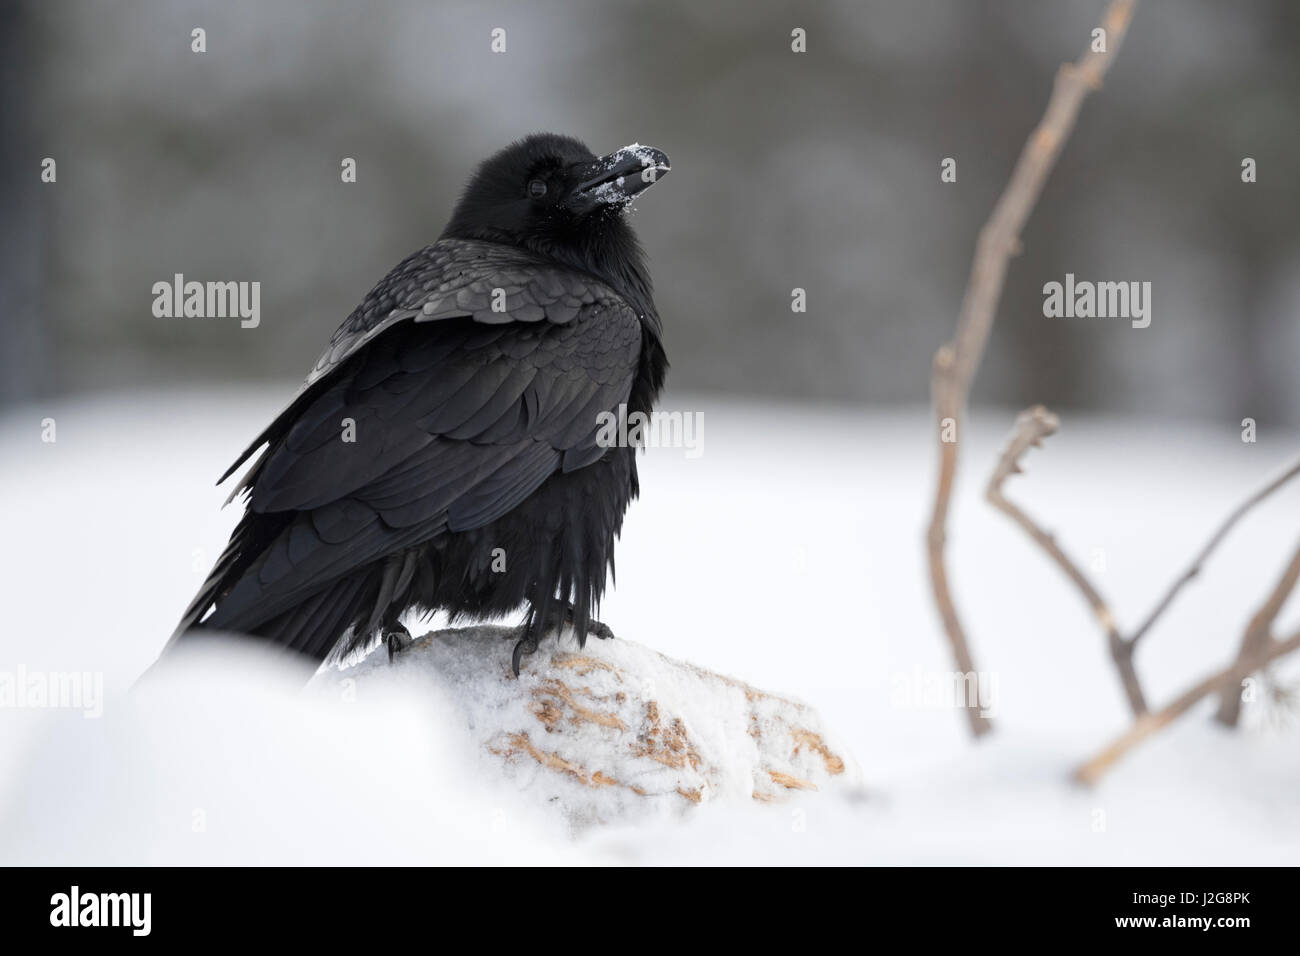 Common Raven / Kolkrabe ( Corvus corax ) in winter, sitting on snow covered ground, looks funny with snow on its beak, Yellowstone area, Montana, USA. Stock Photo